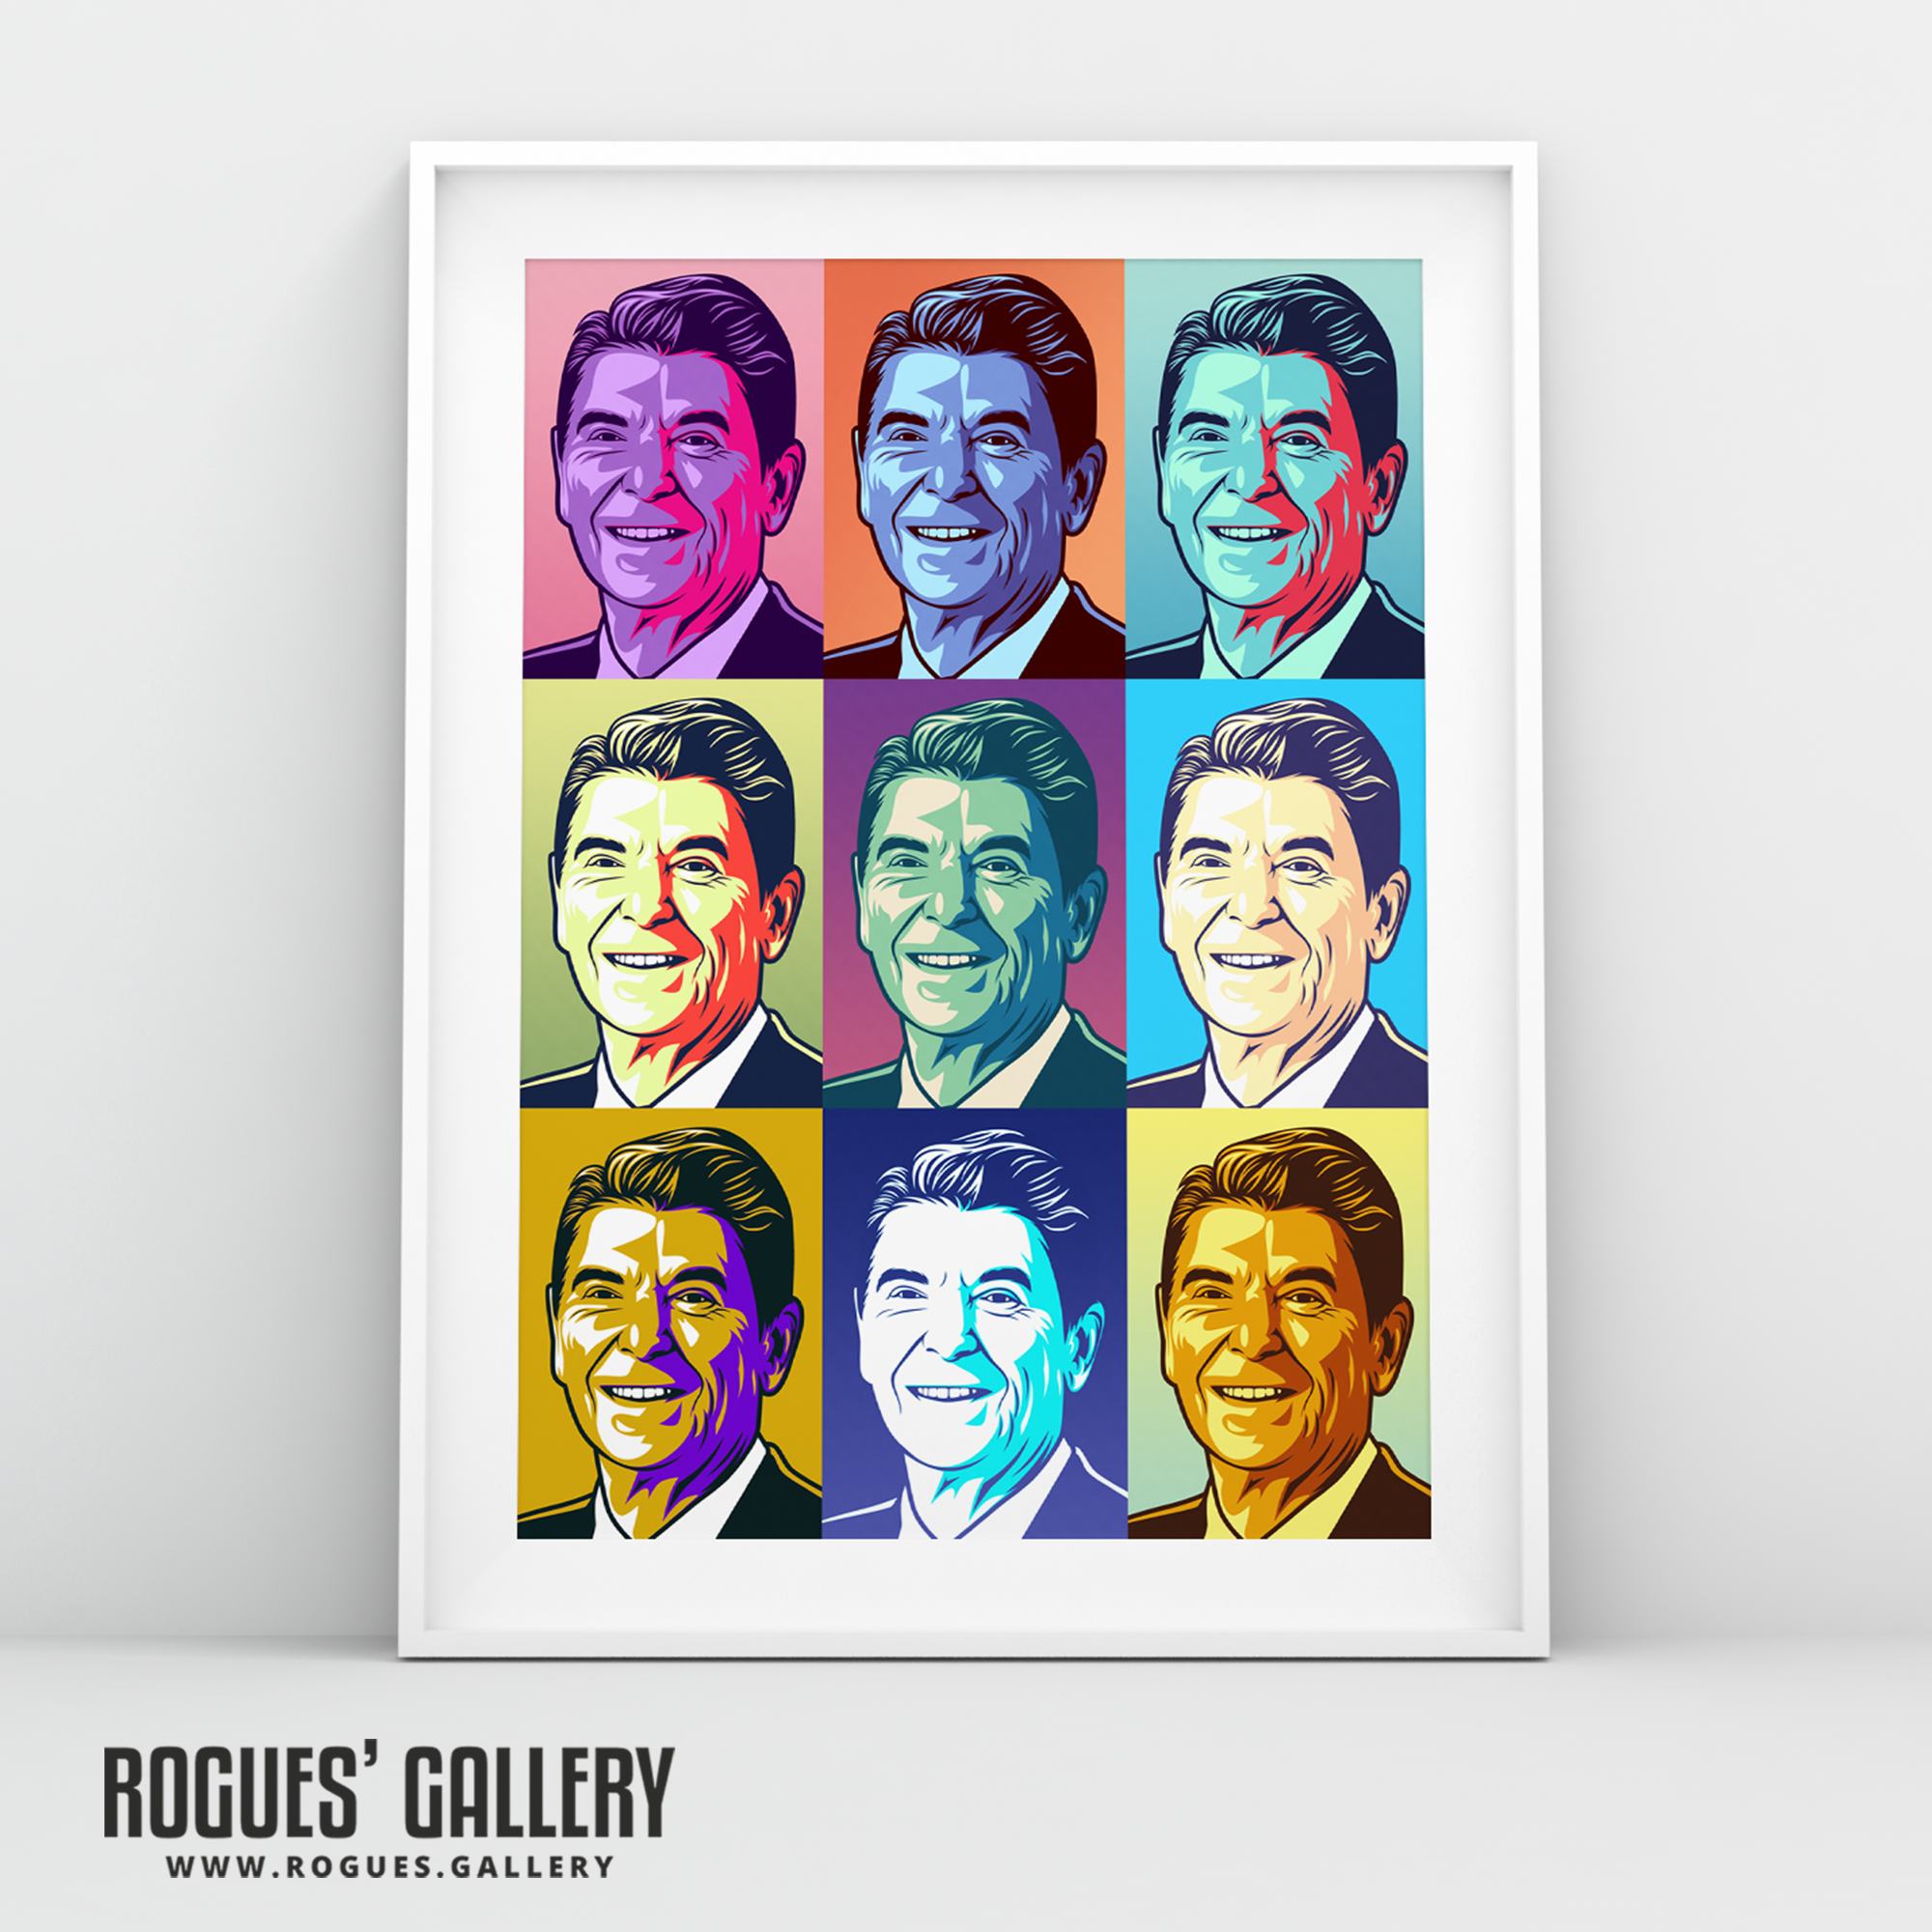 Ronald Reagan POTUS USA President A3 edits pop art print